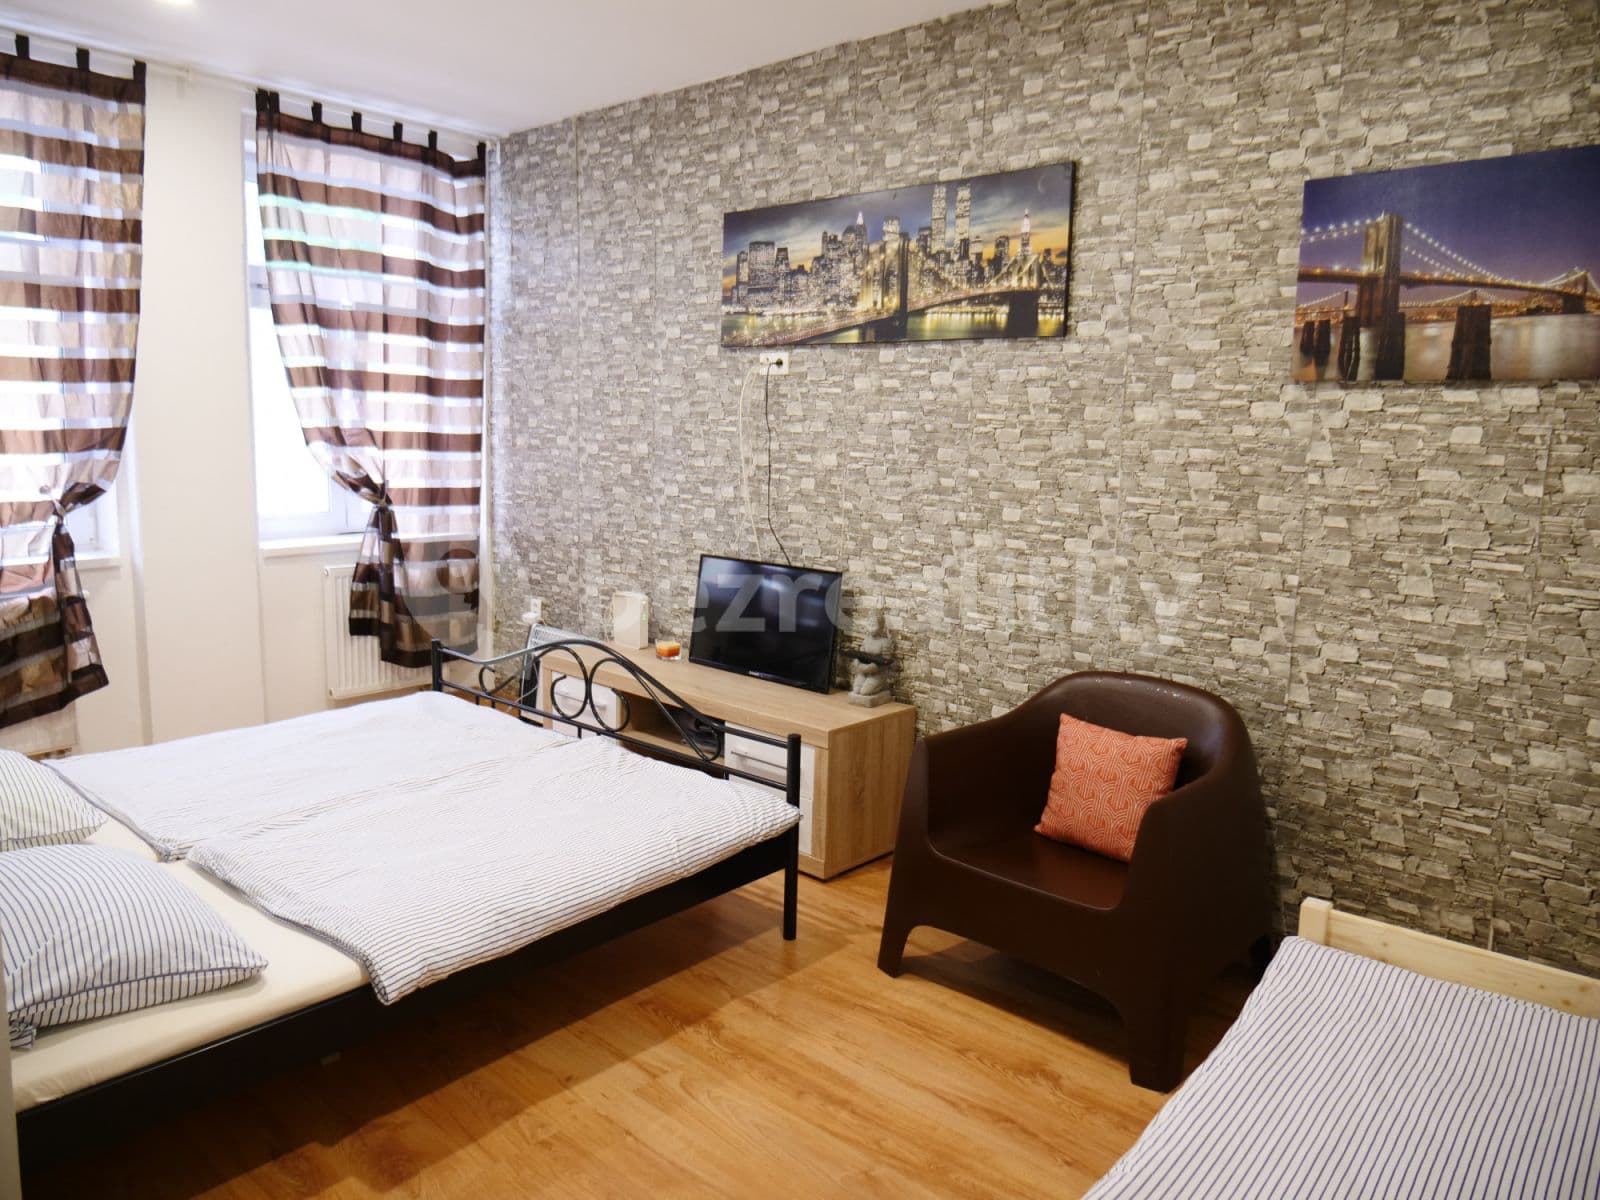 1 bedroom flat to rent, 47 m², Ruská, Teplice, Ústecký Region